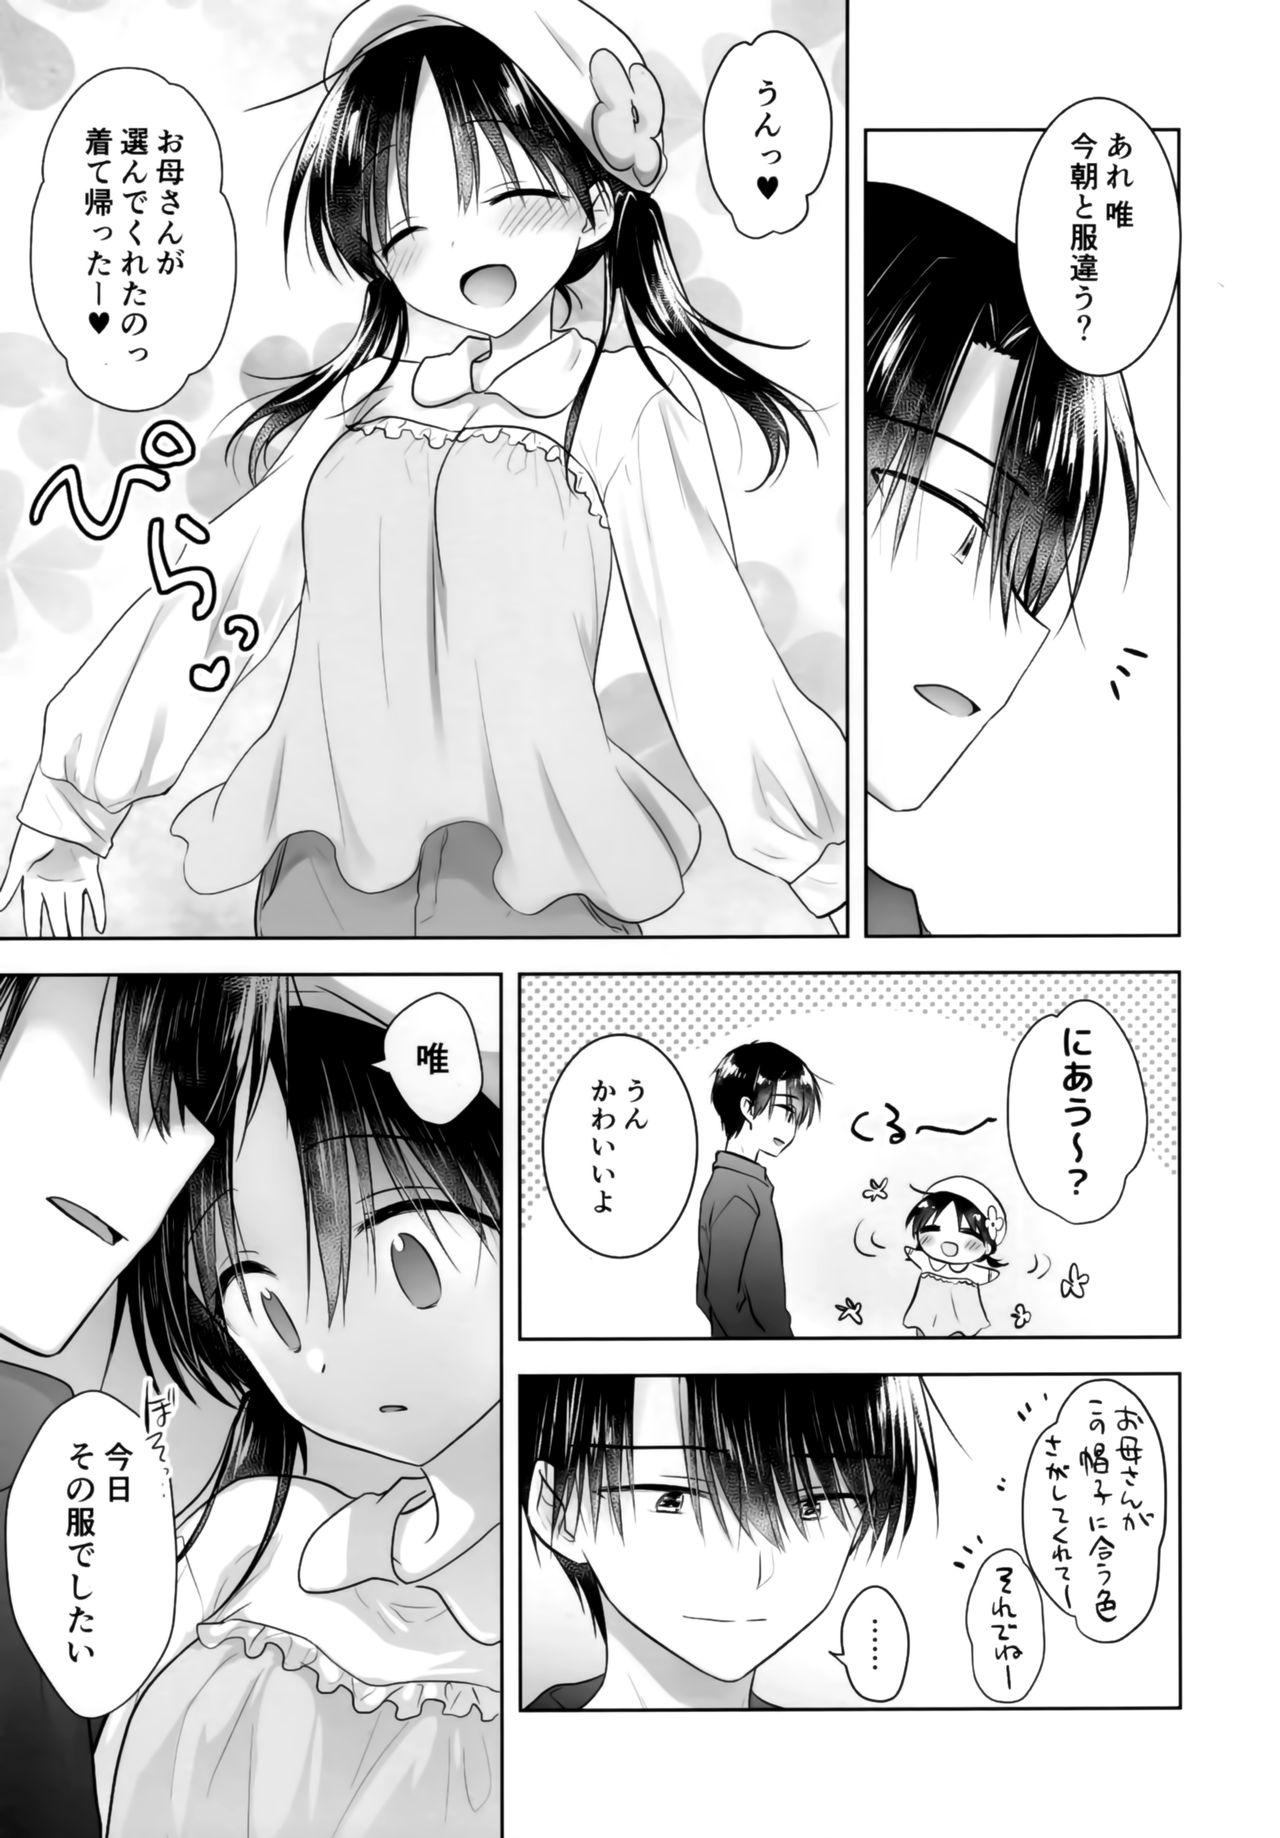 Furry Okasan ga eranda fuku de Girlfriends - Page 4